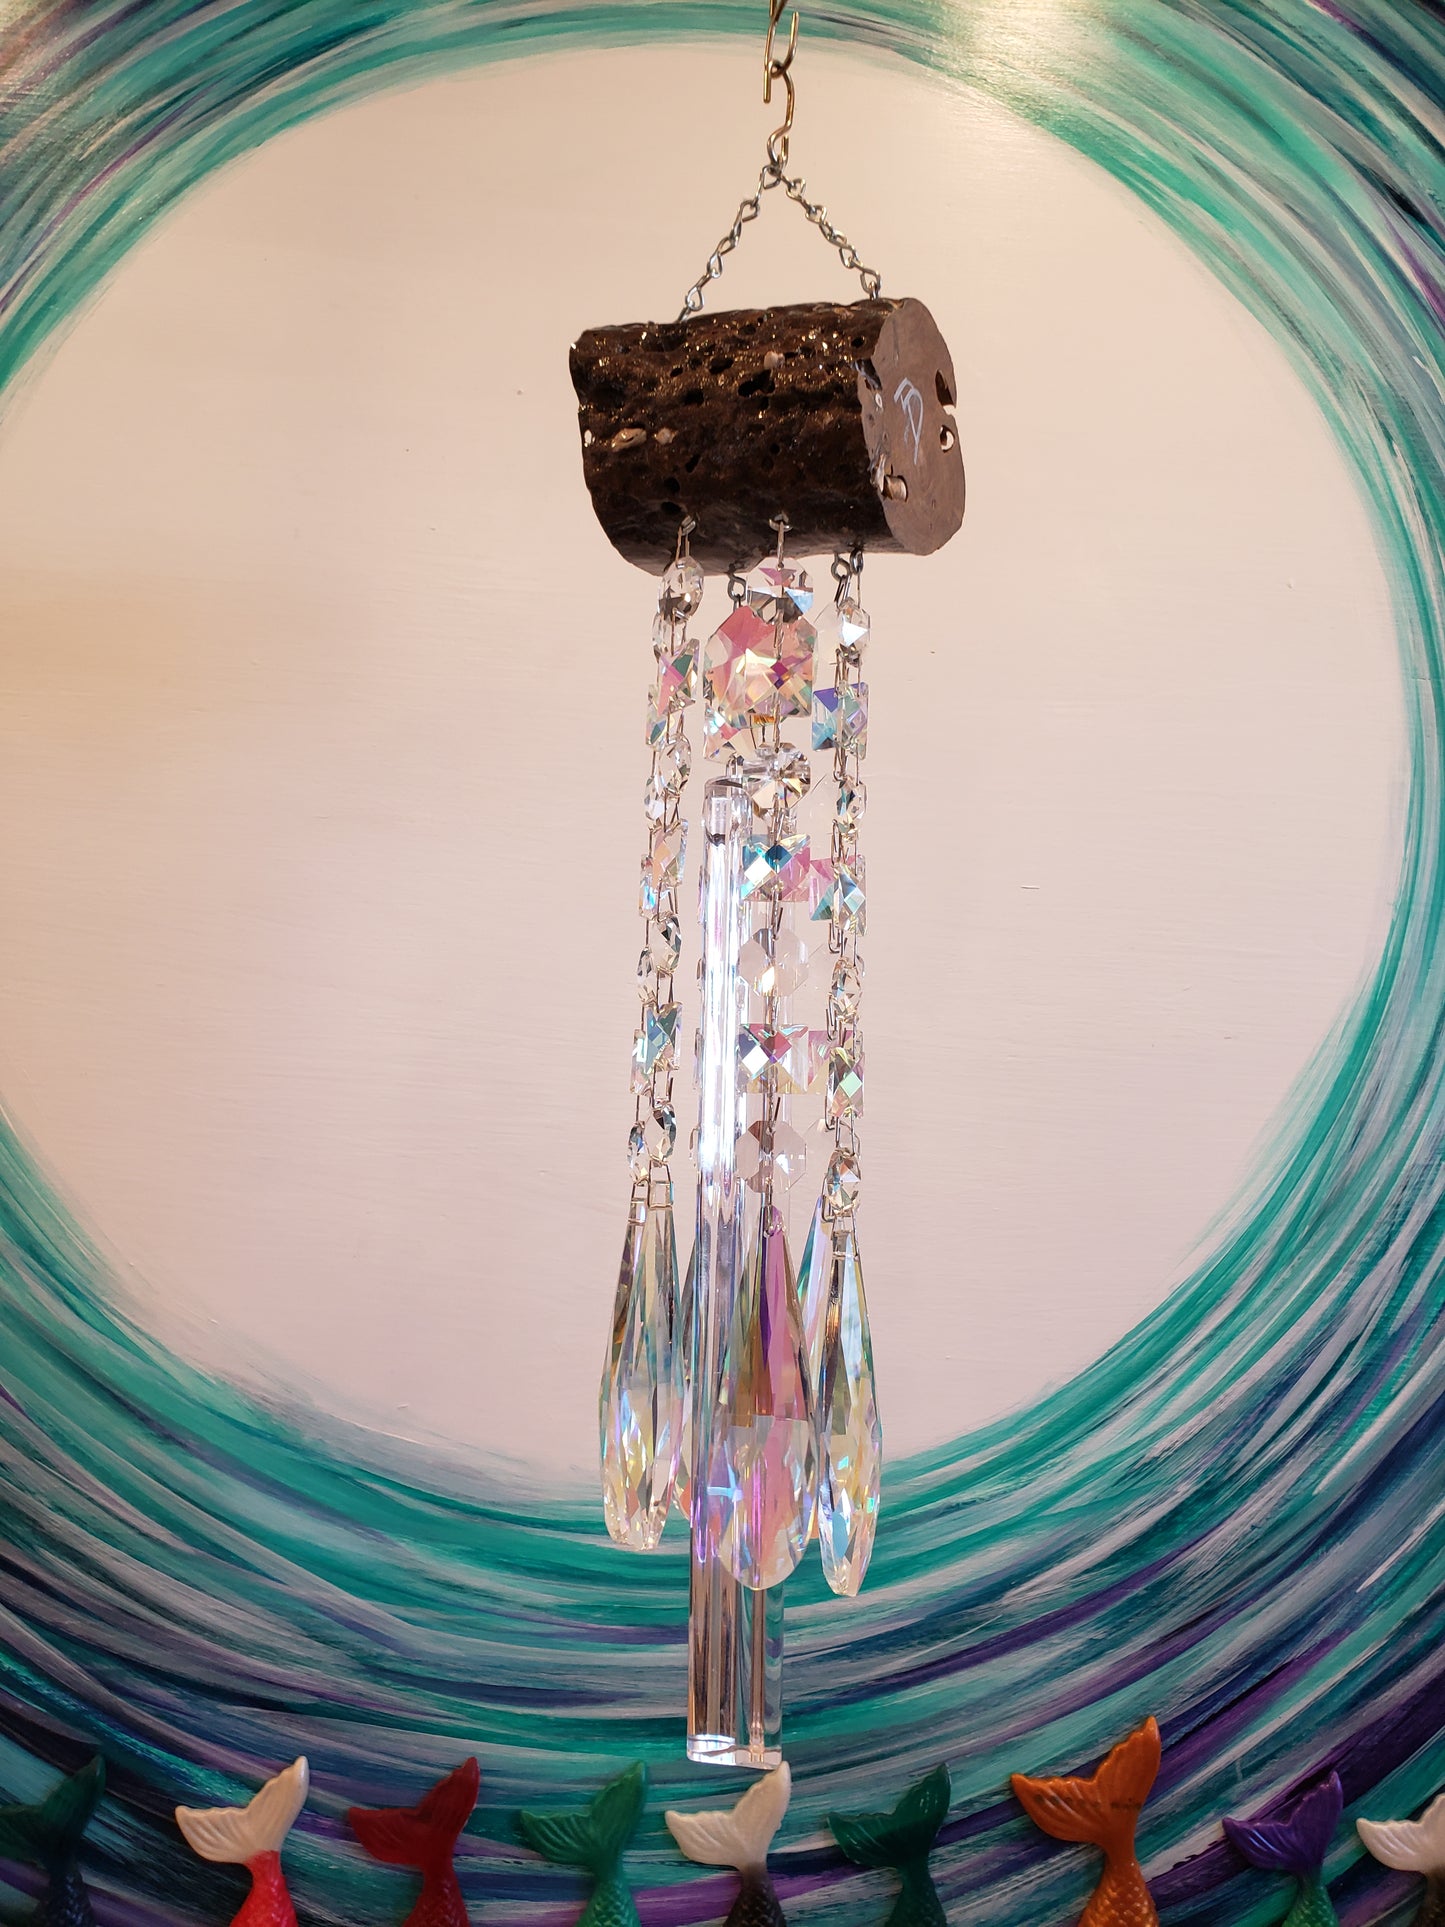 Unqiue chandlier crystal windchime suncatcher by Dazzling Driftwood